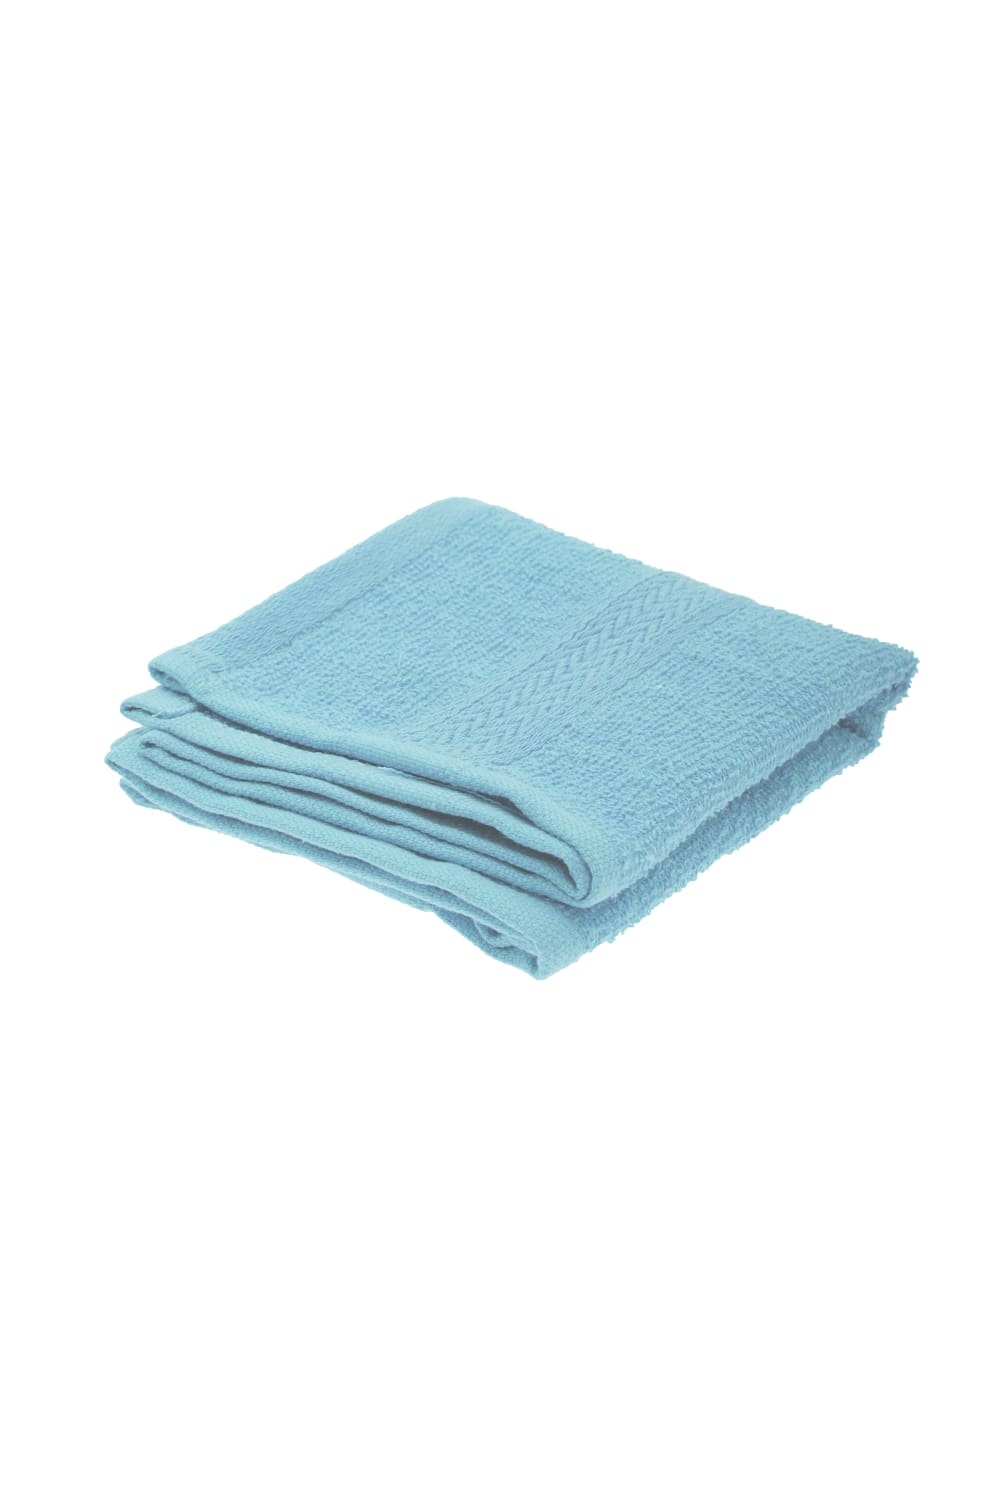 Jassz Plain Guest Hand Towel (350 GSM) (Light Blue) (One Size)